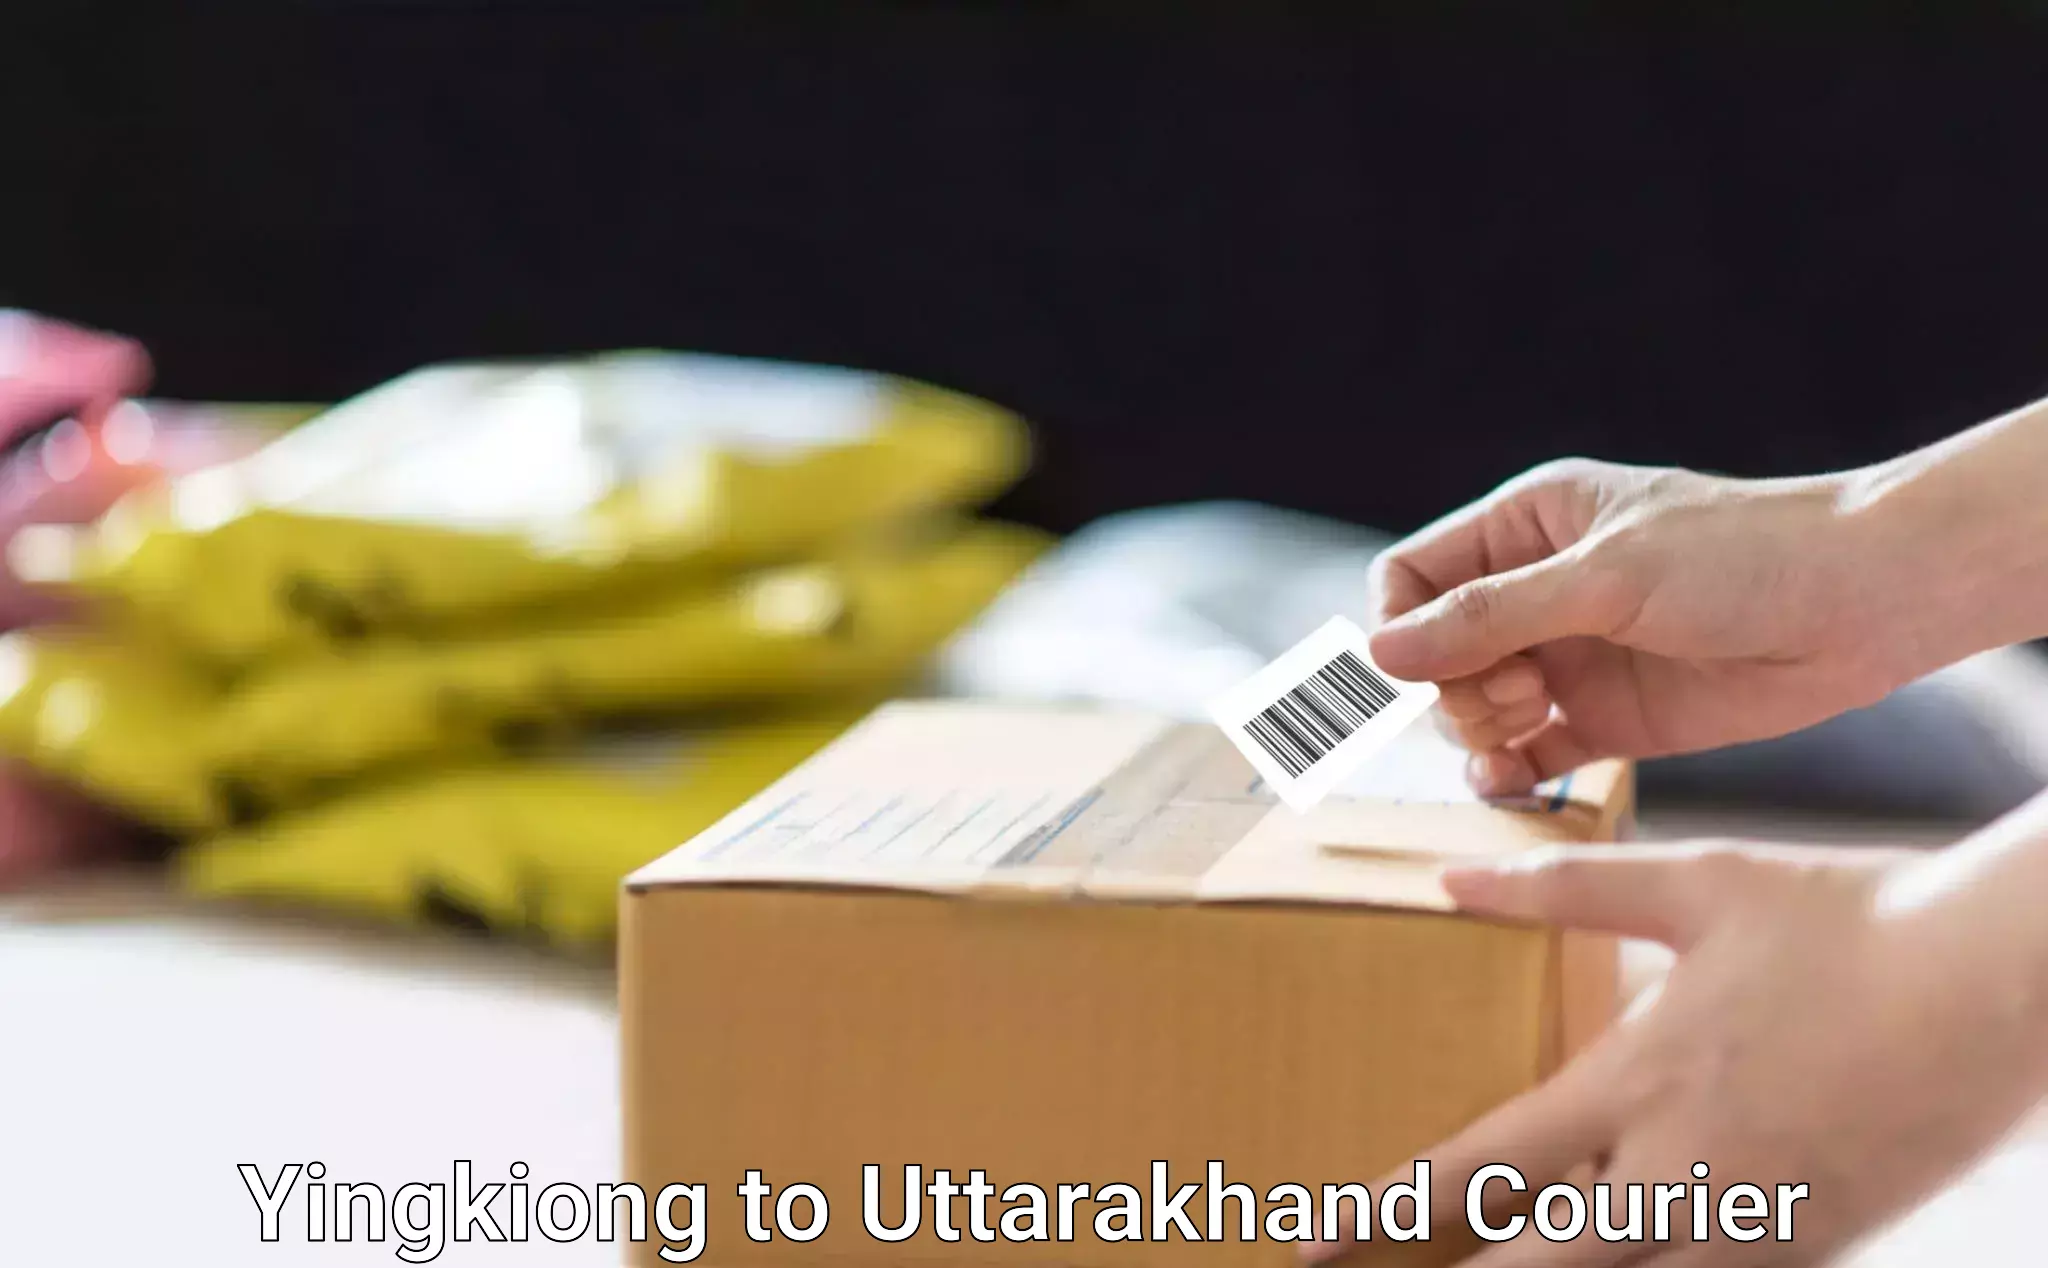 Automated shipping processes Yingkiong to Uttarakhand